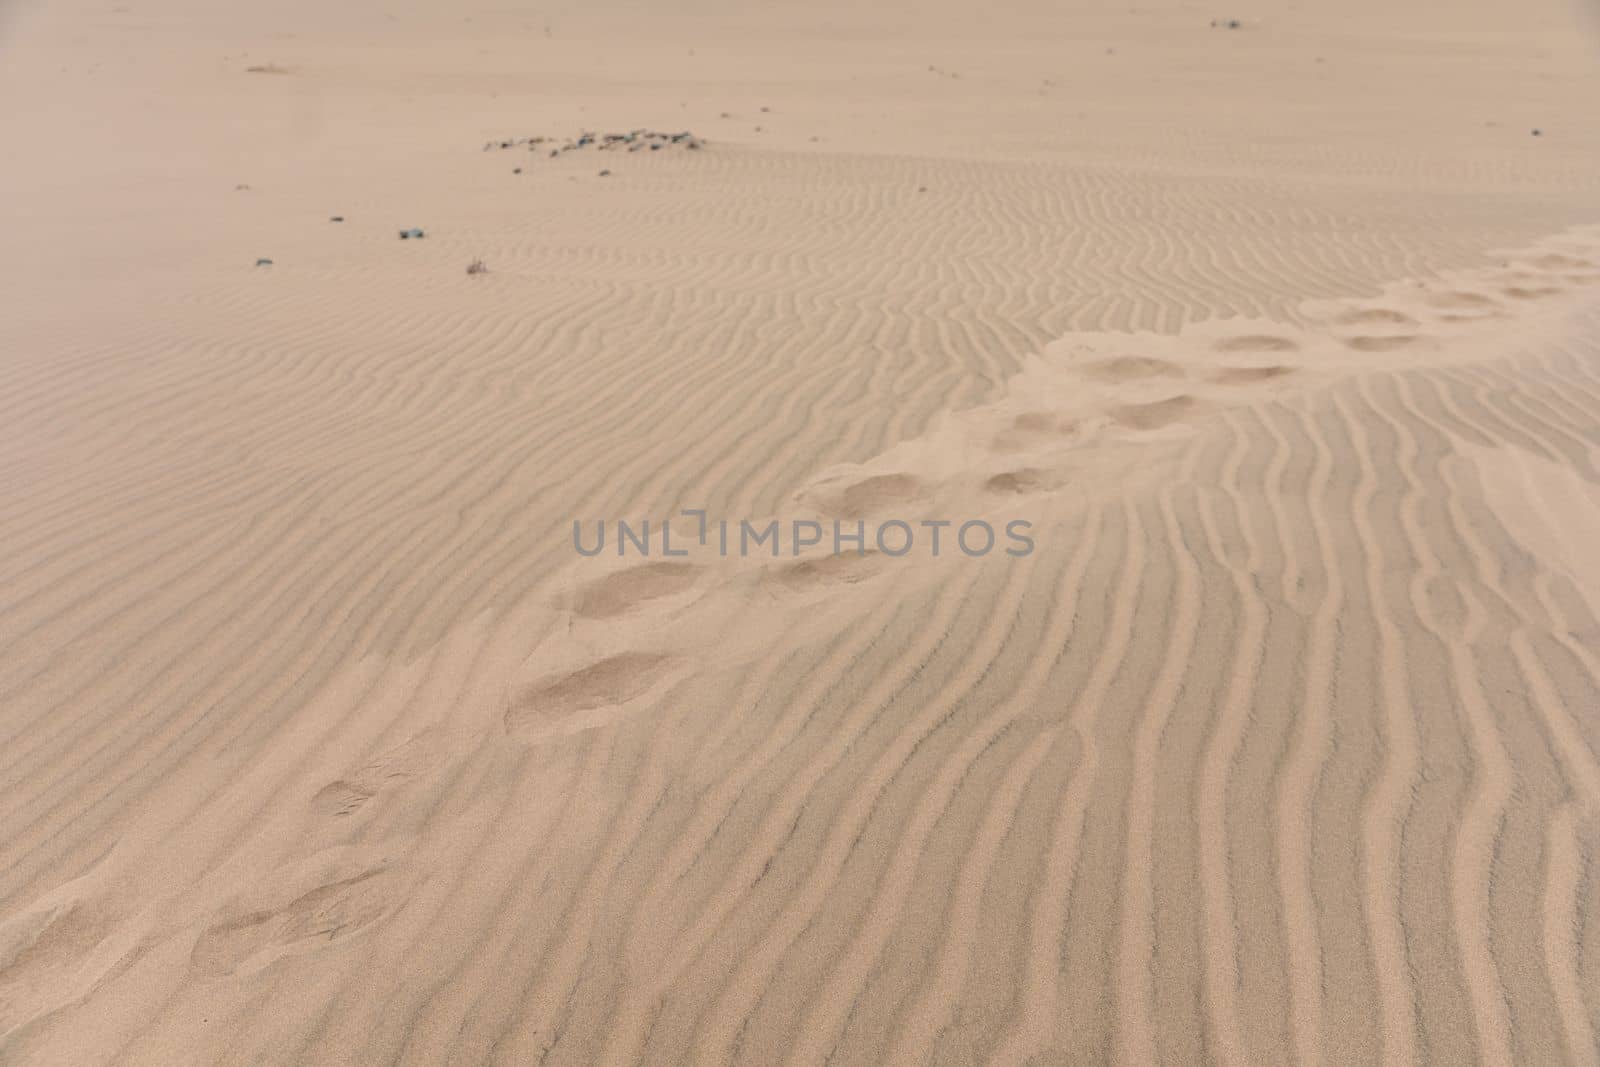 shoe prints on sand dune.